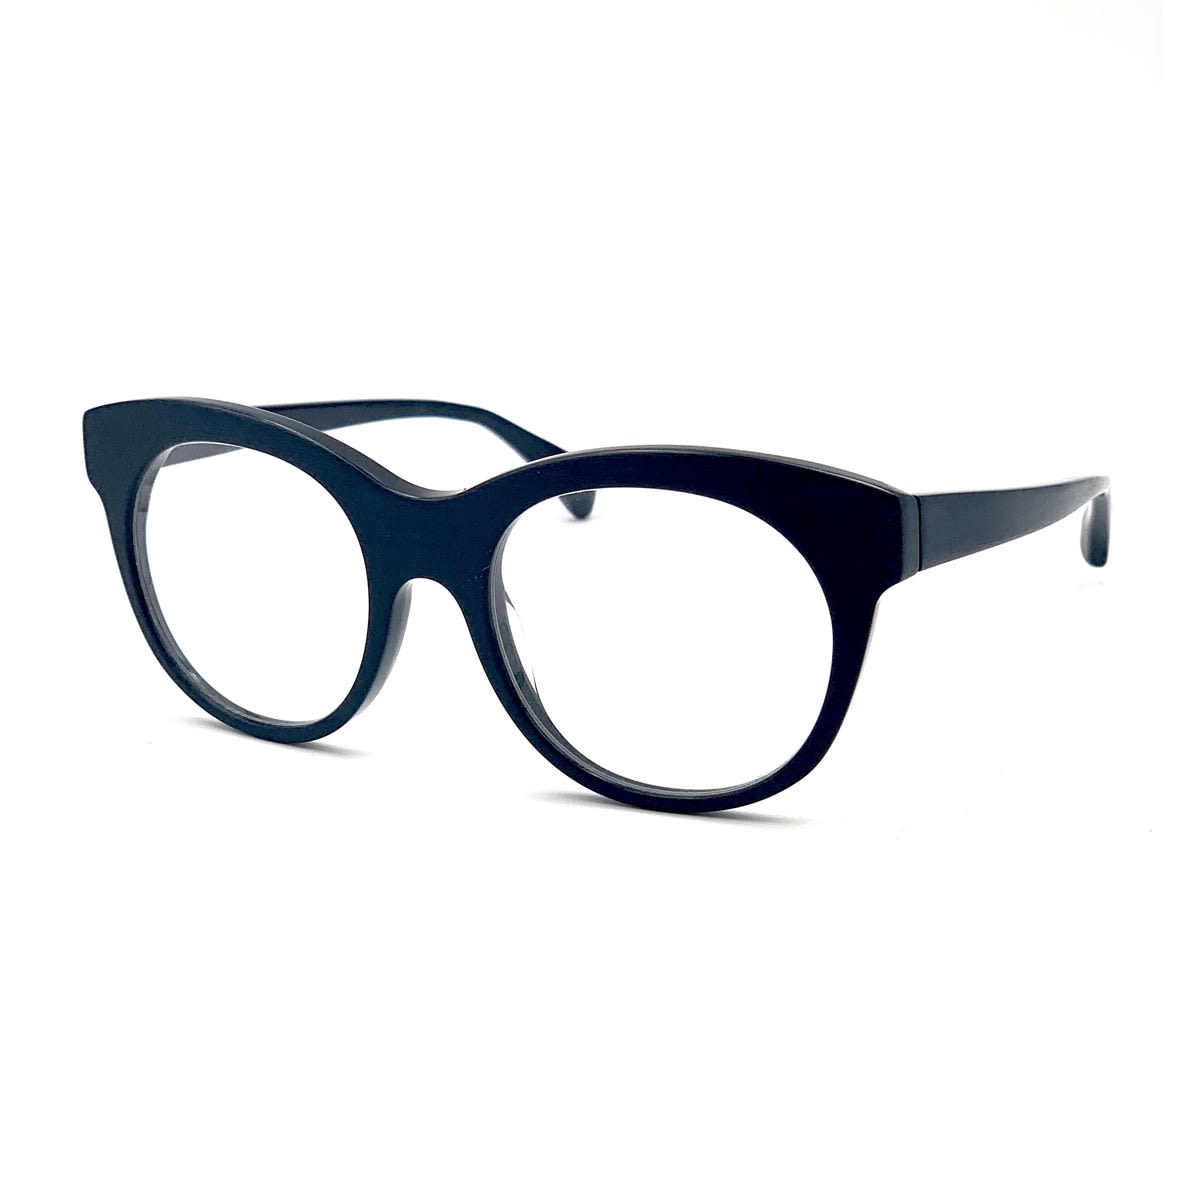 Jacques Durand Port-cros Xl170 Glasses